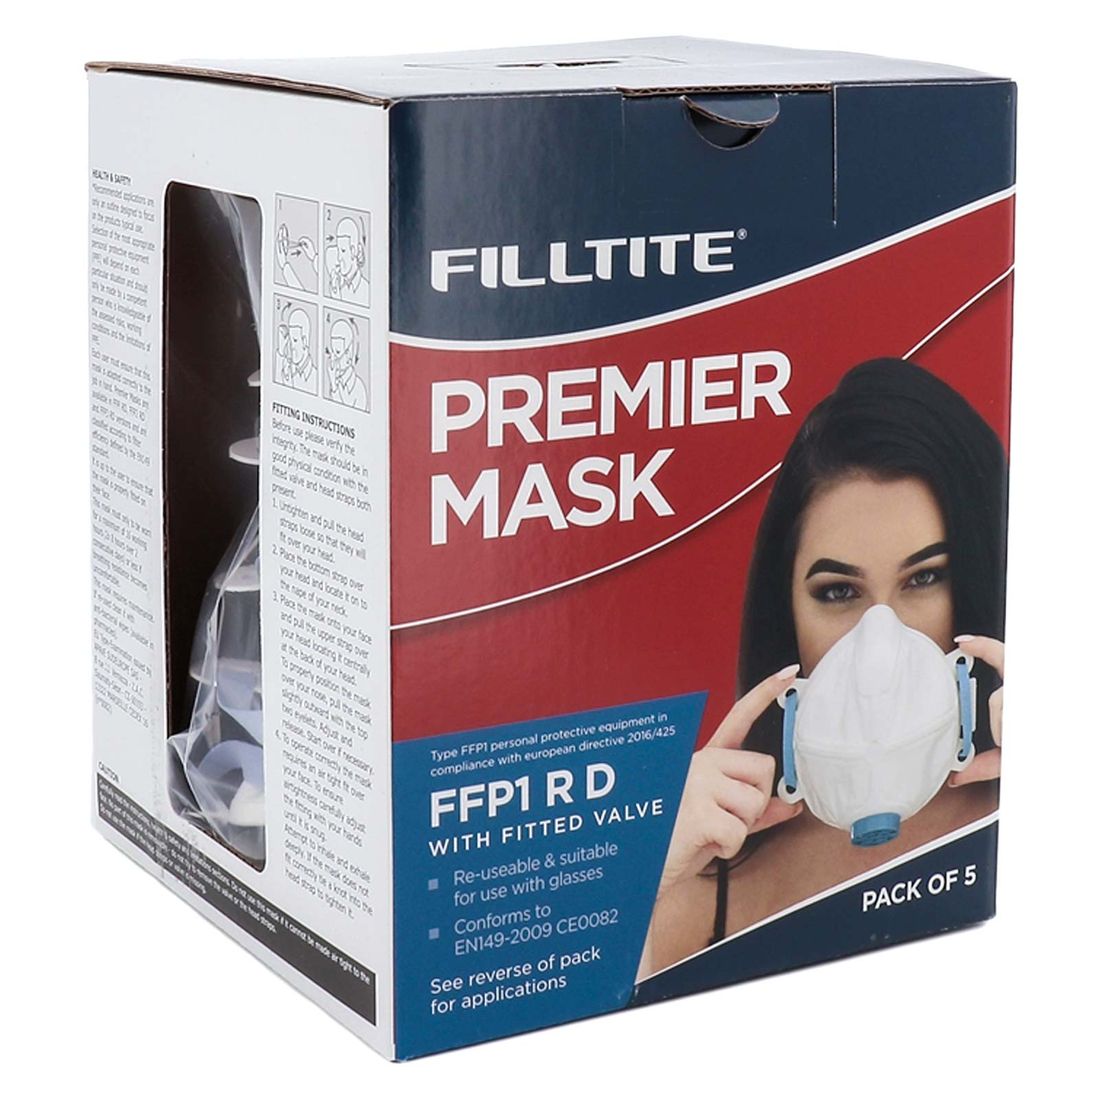 Ffp1 Premier Mask With Valve Pk5